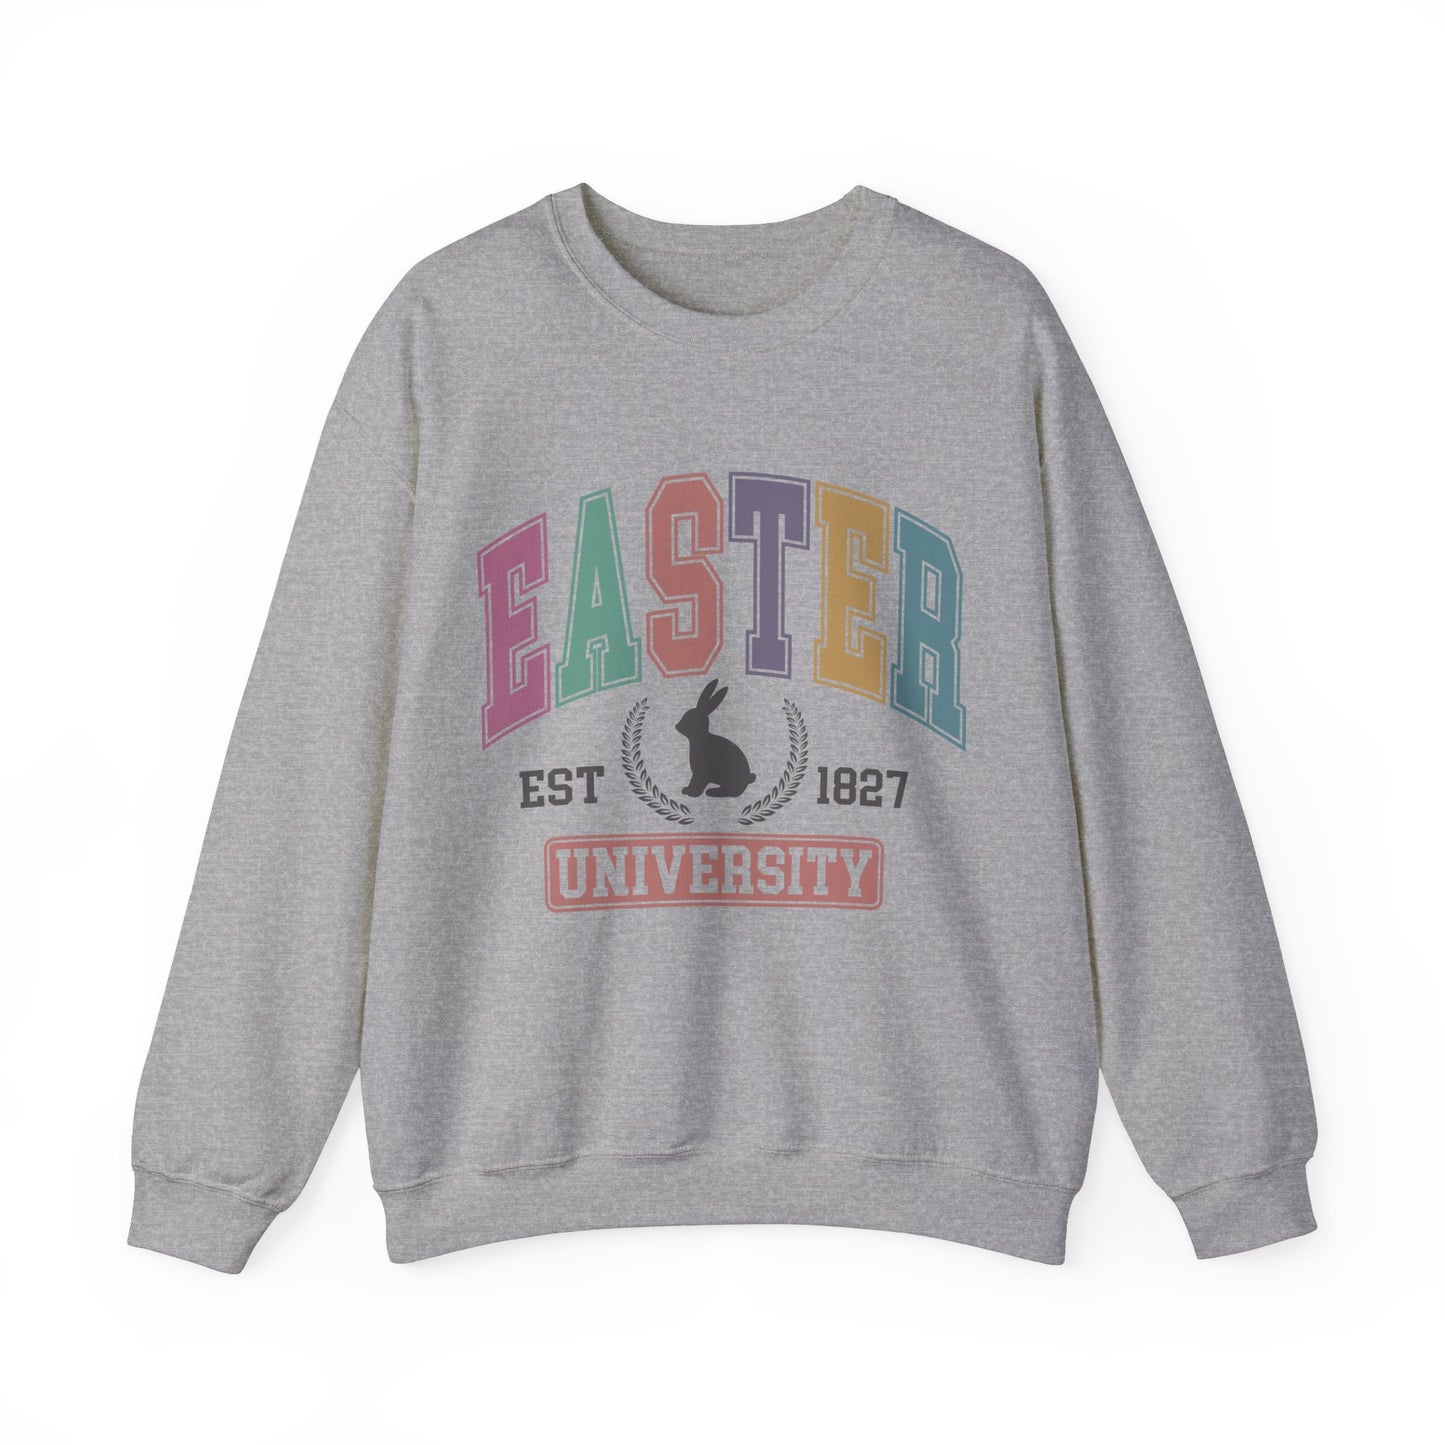 Easter University Women's Easter Sweatshirt